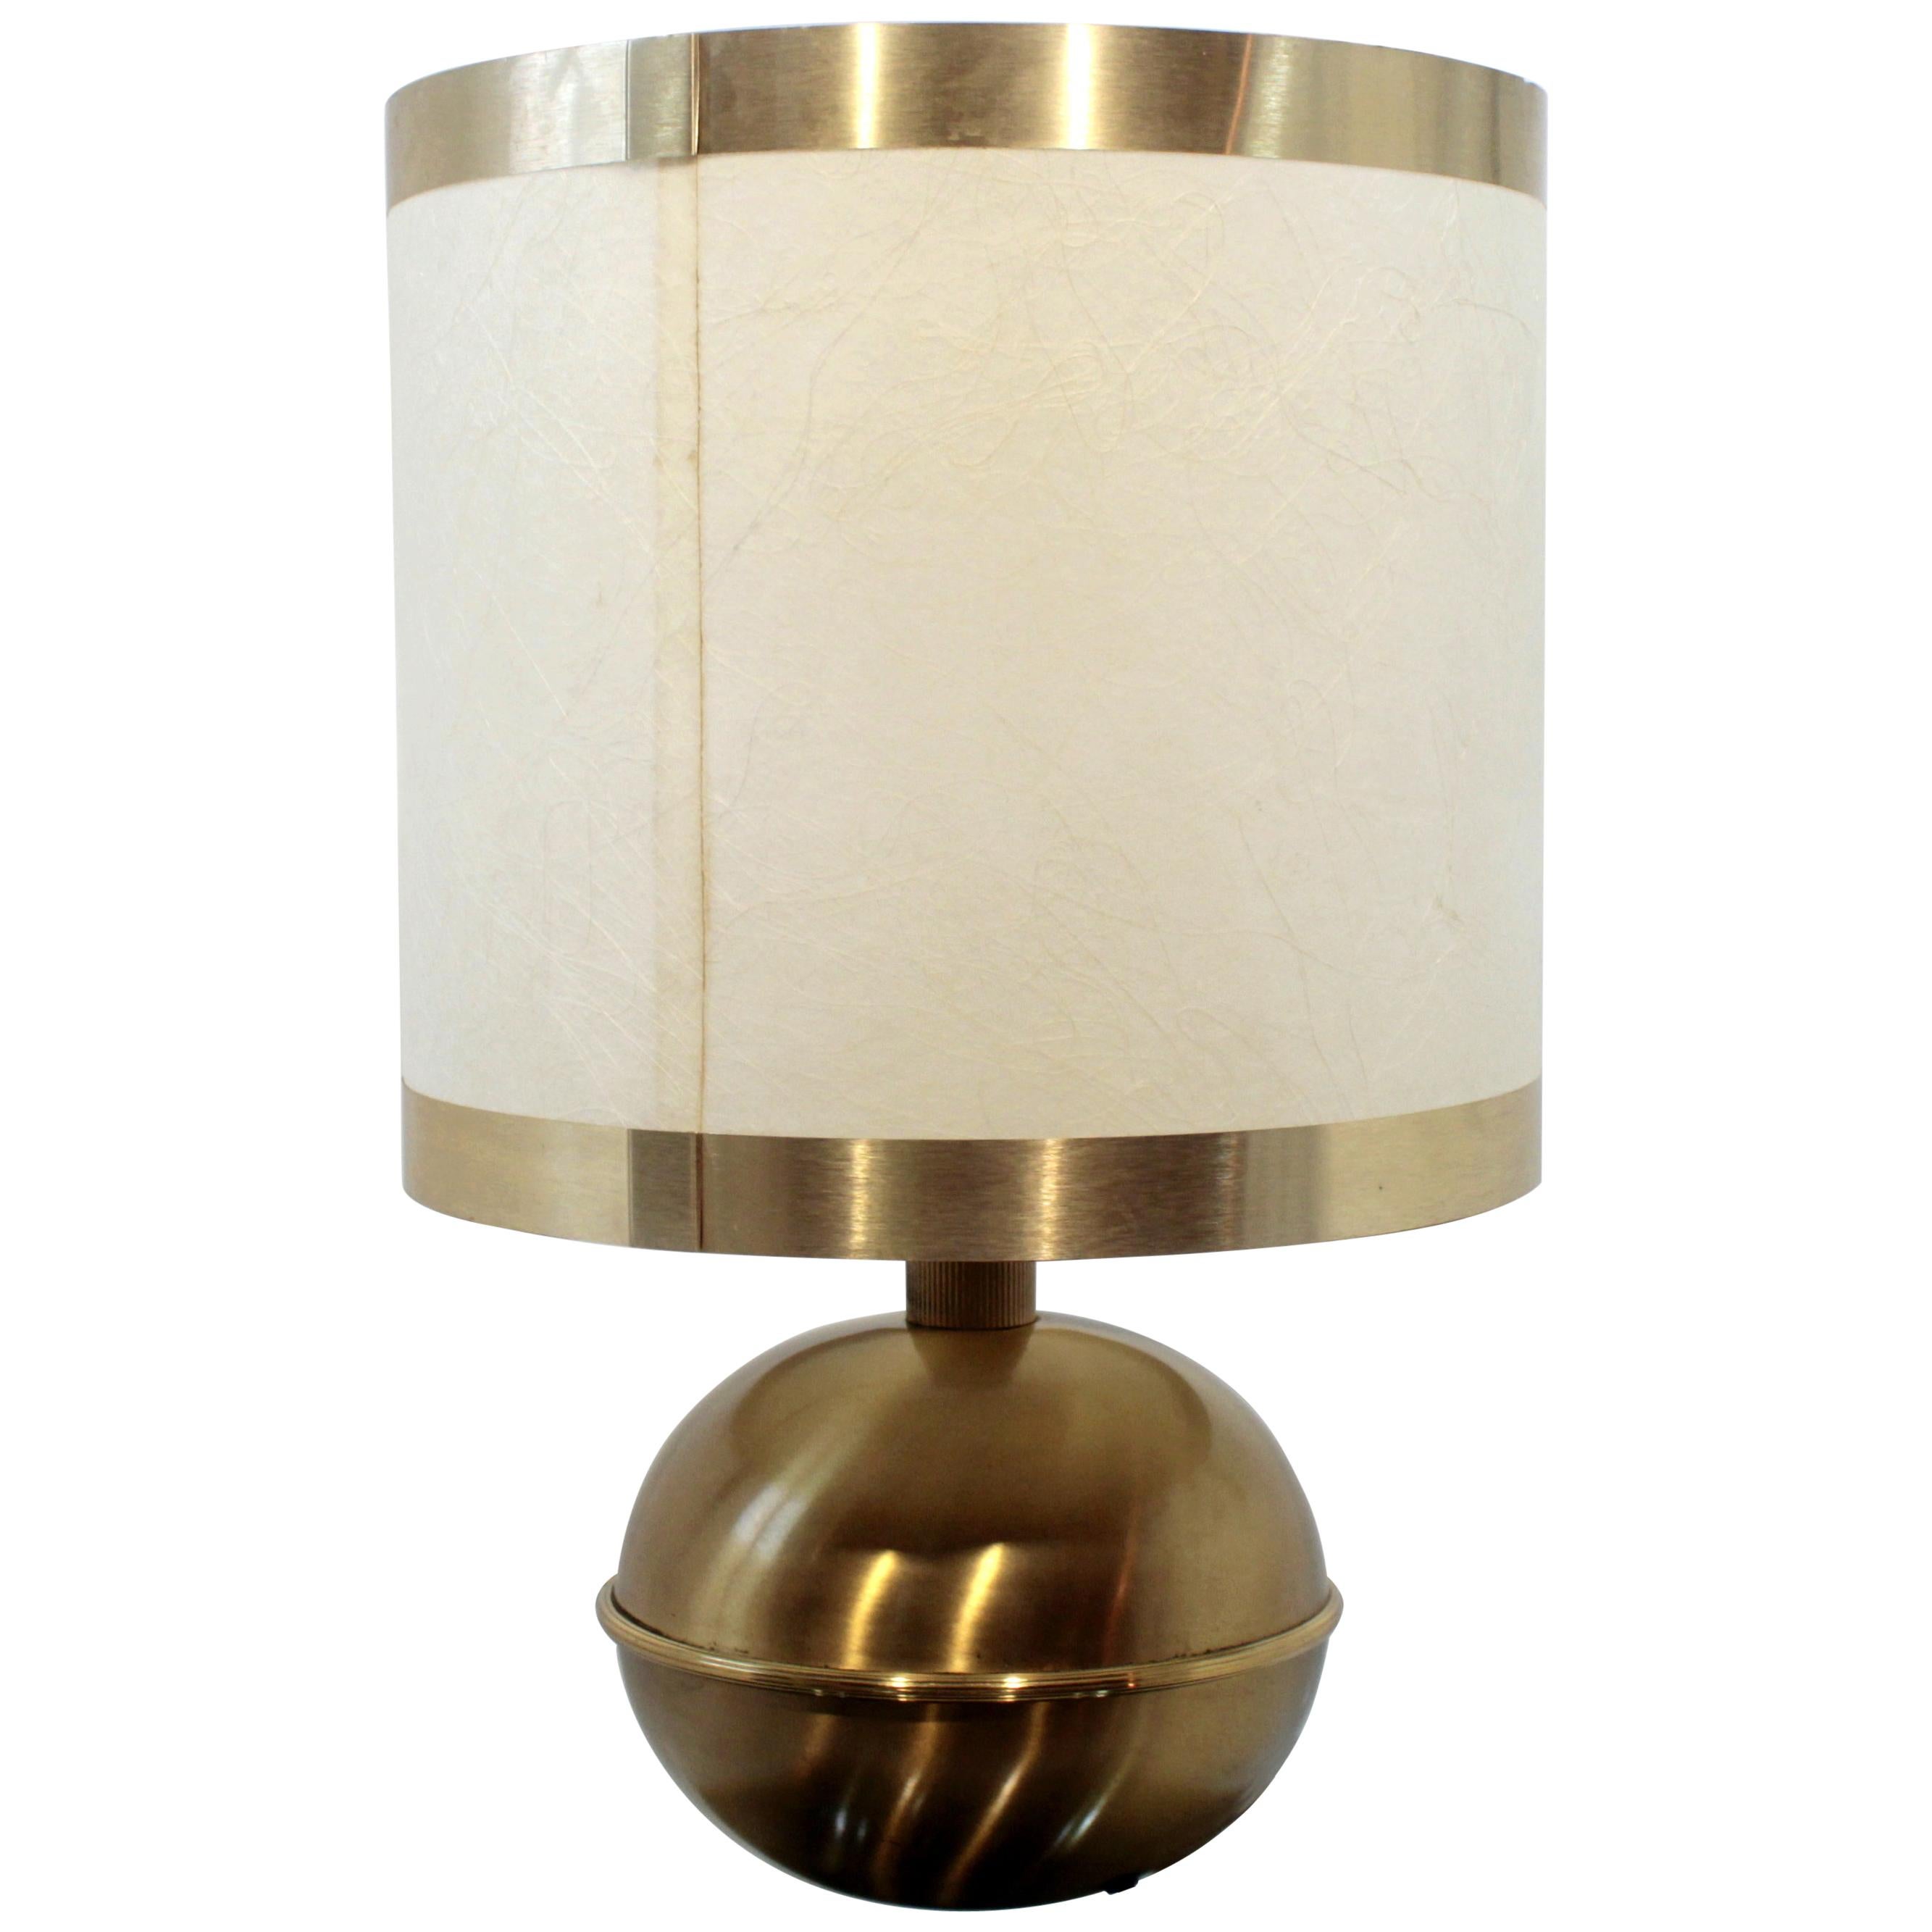 Rare 1960s-1970's Italian Design Lamperti Table Lamp For Sale